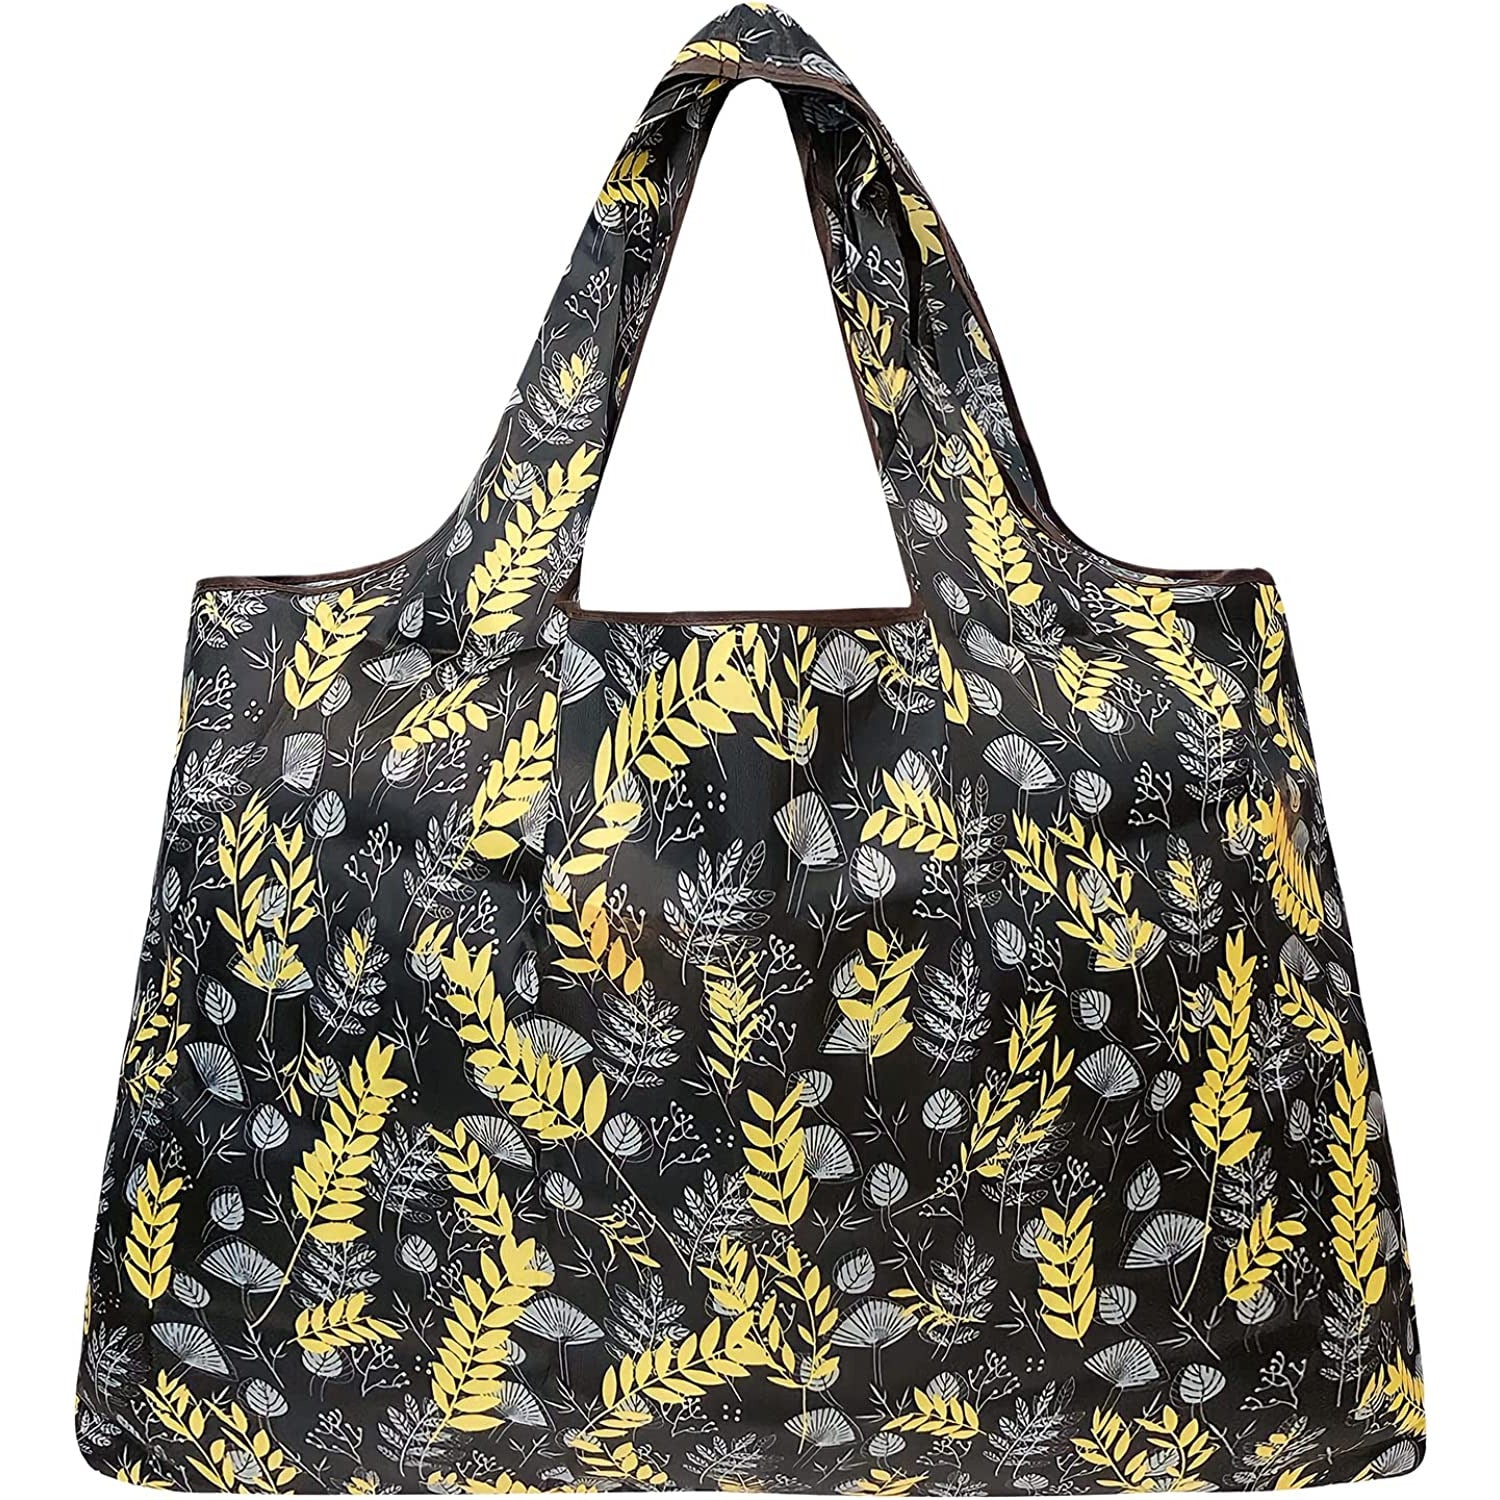 Wholesale Lot Handbags, Patchwork Purse, Swap Meet item or flea market |  eBay